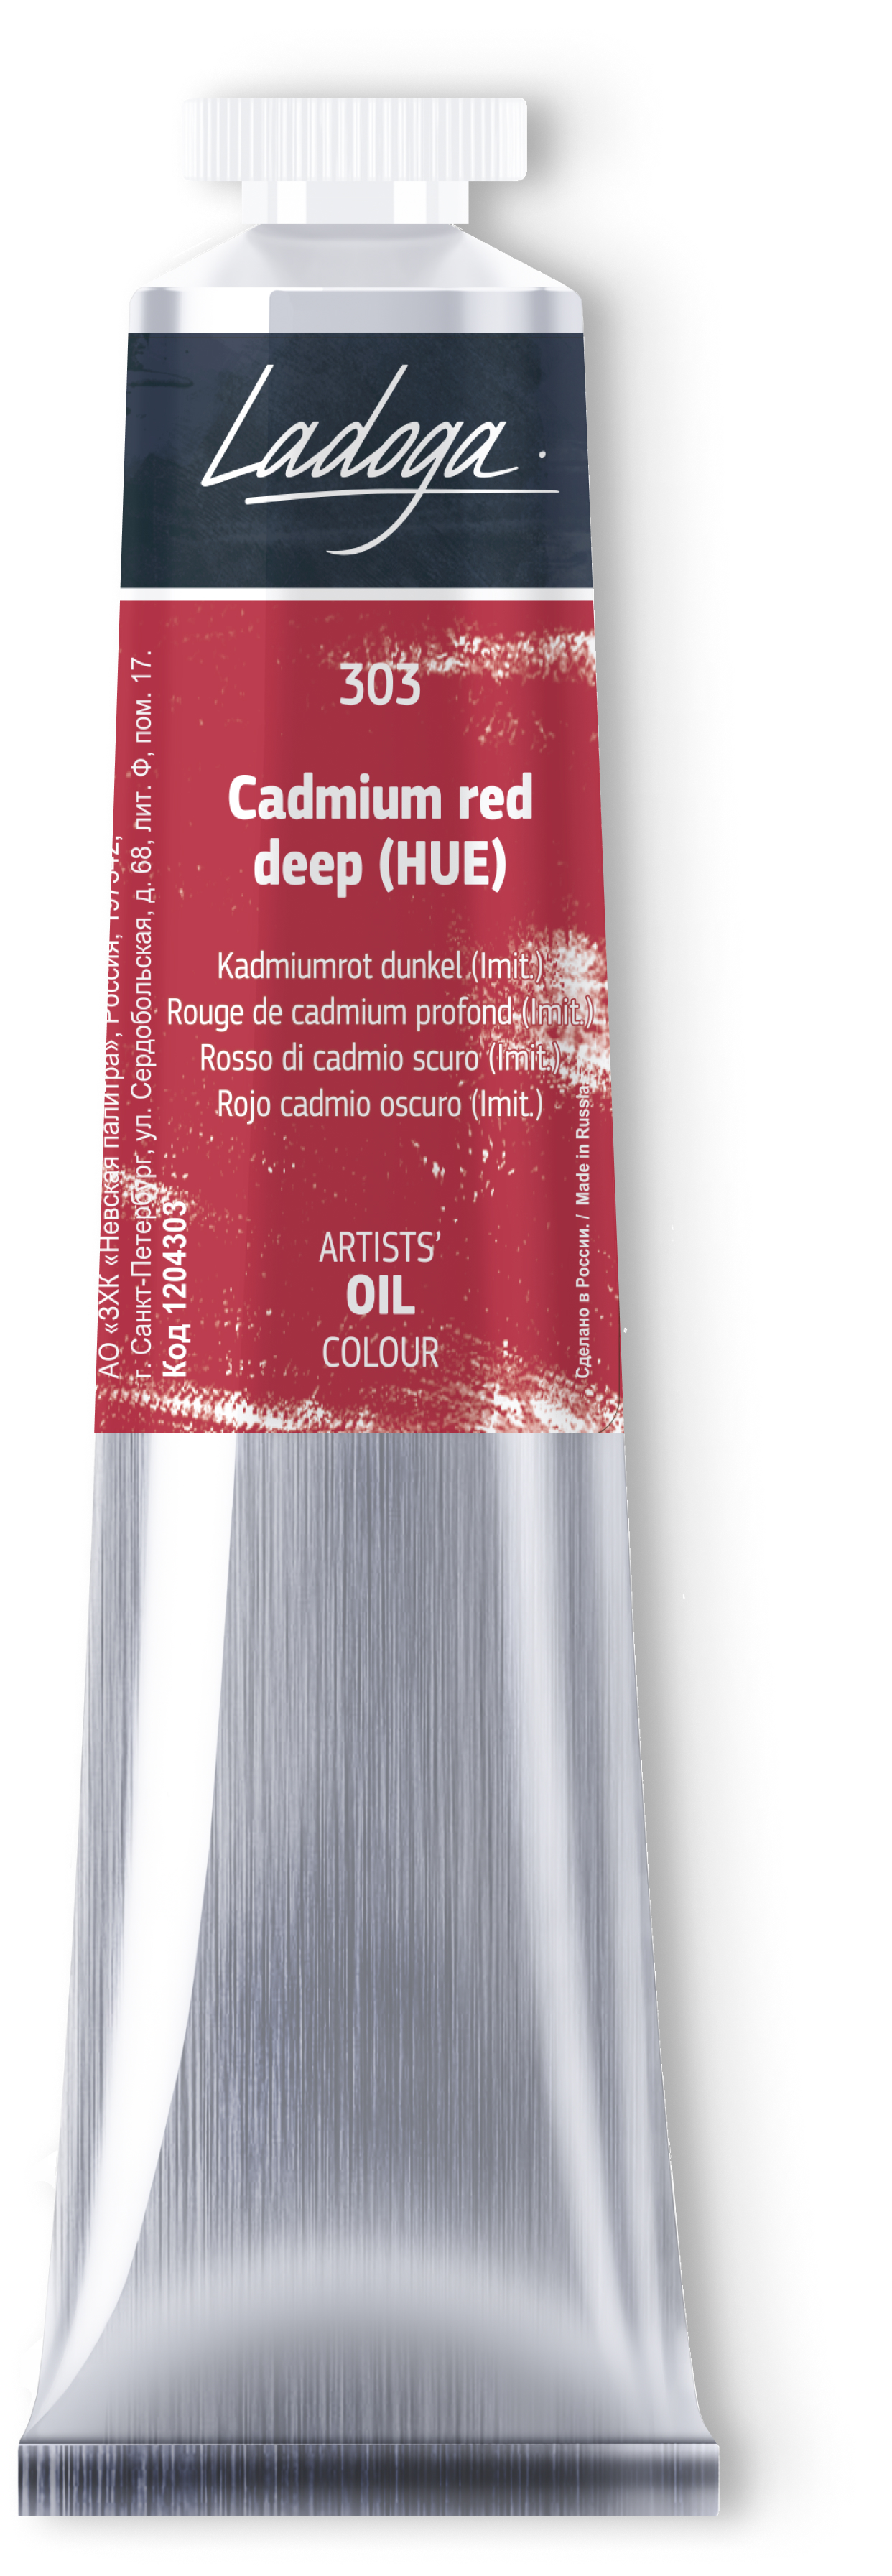 Oil colour "Ladoga", Cadmium red deep (HUE), tube, № 303